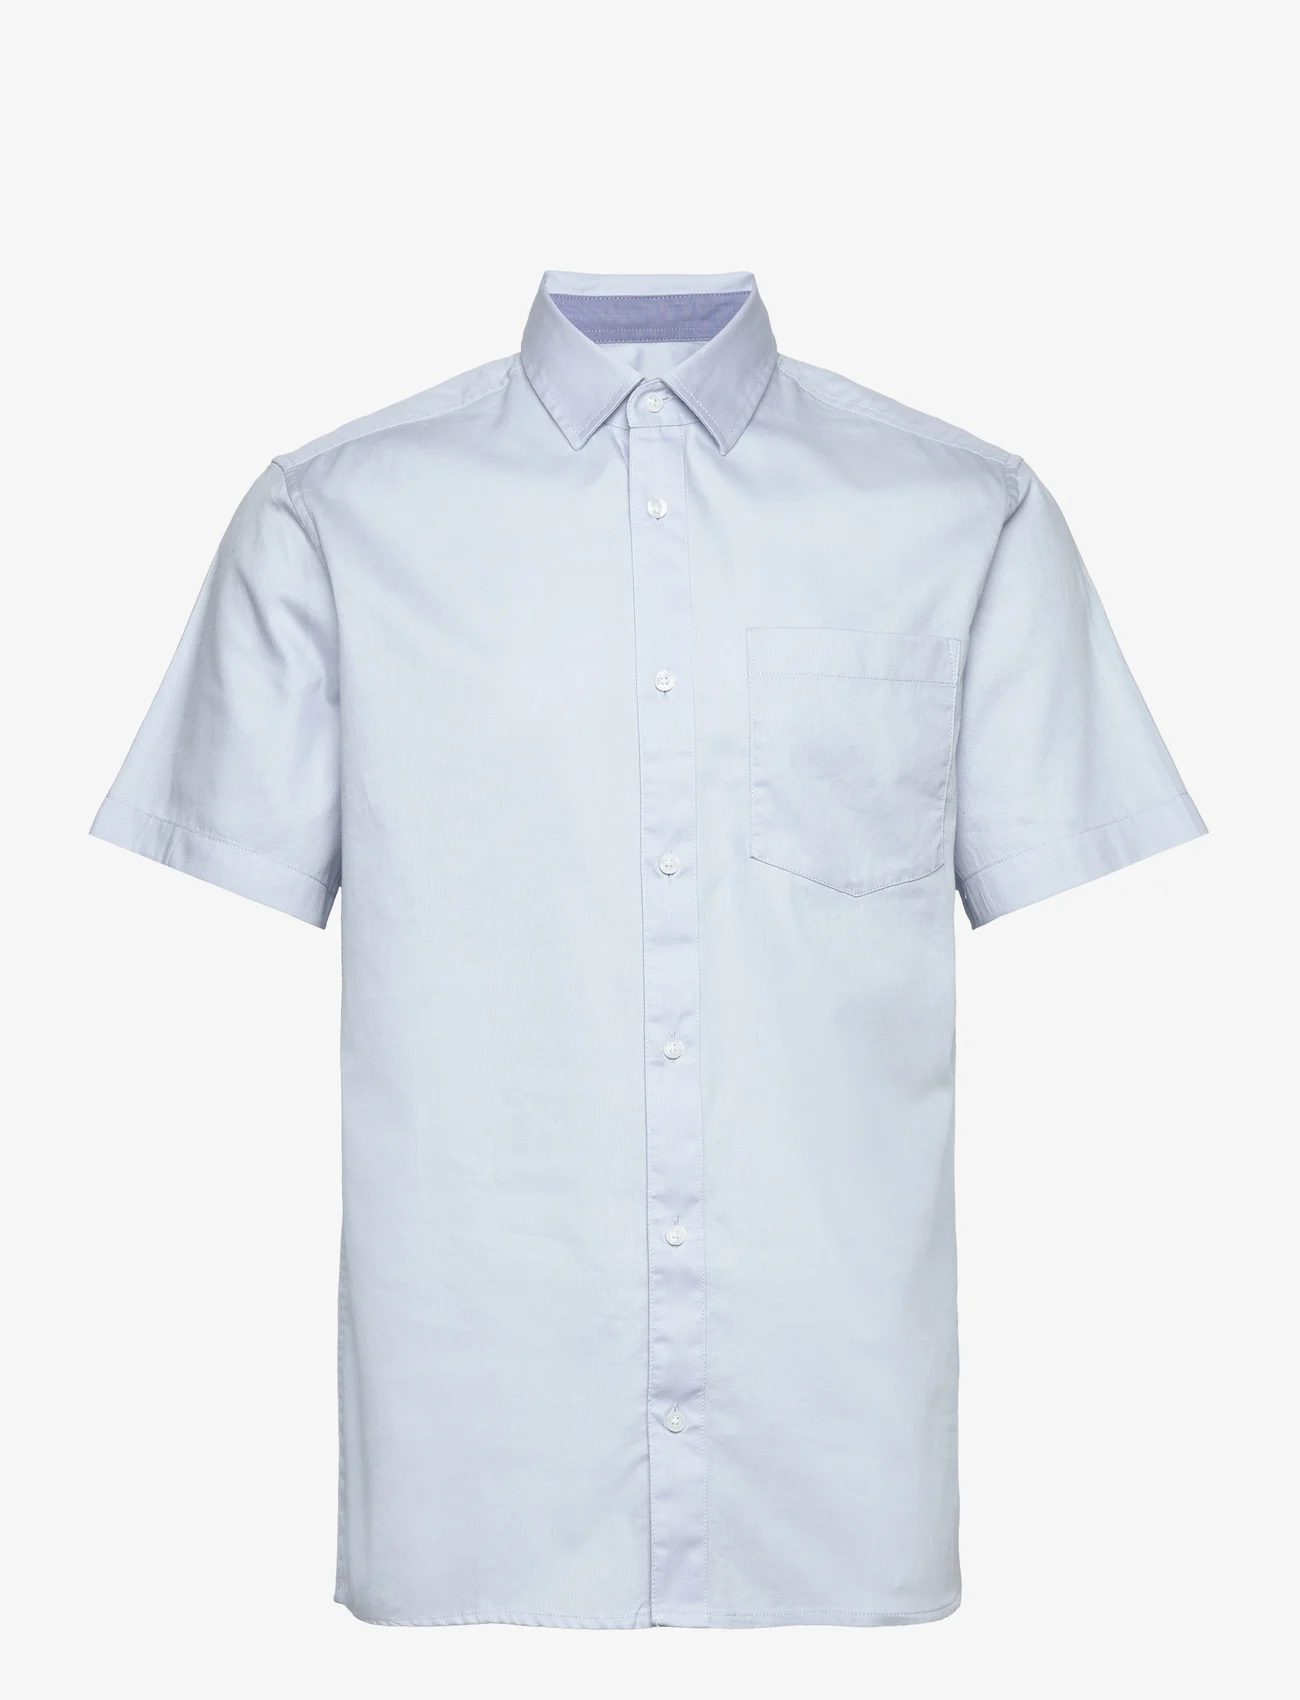 Tom Tailor - bedford shirt - kortermede skjorter - light metal blue - 0